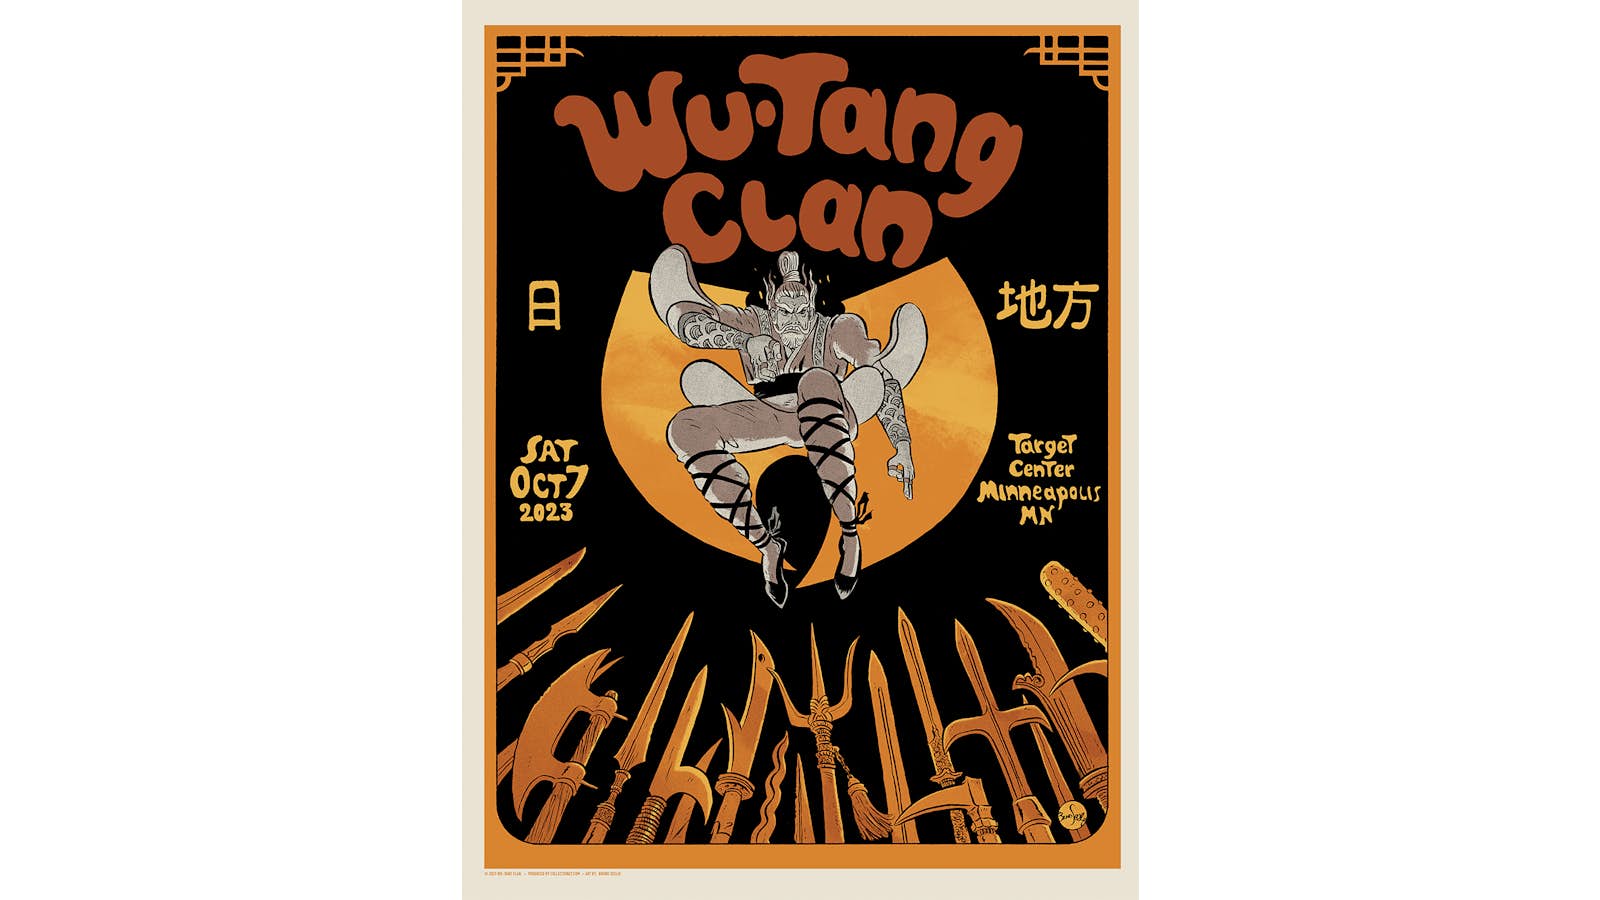 Wu-Tang Clan Target Center Minneapolis Oct 07, 2023 Poster Shirt